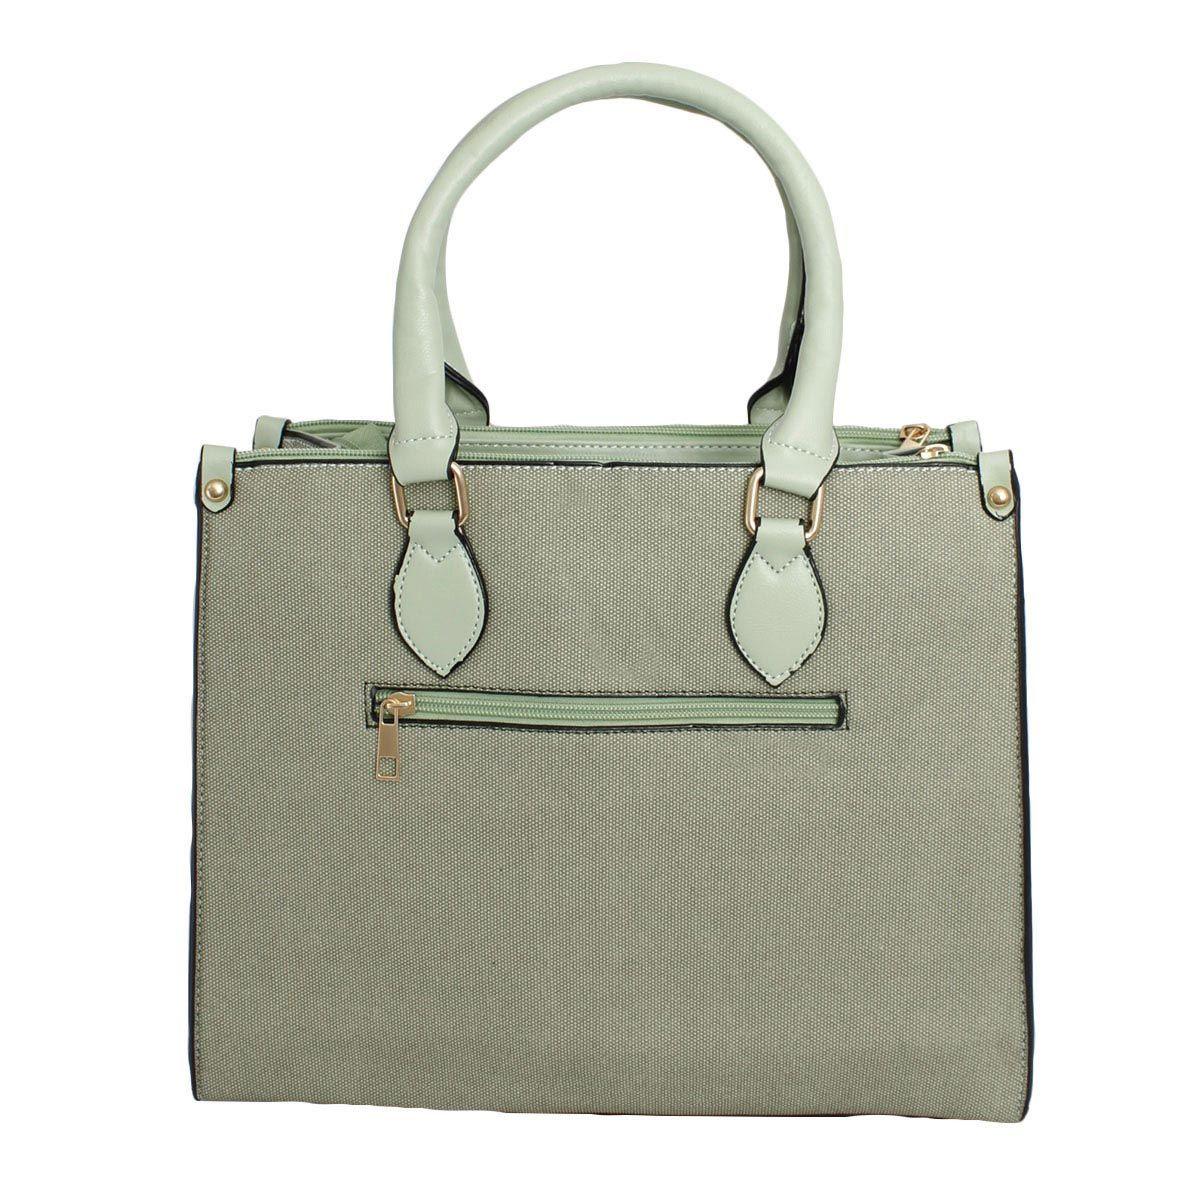 Get Noticed with Stylish Green Granule Satchel Handbag for Women